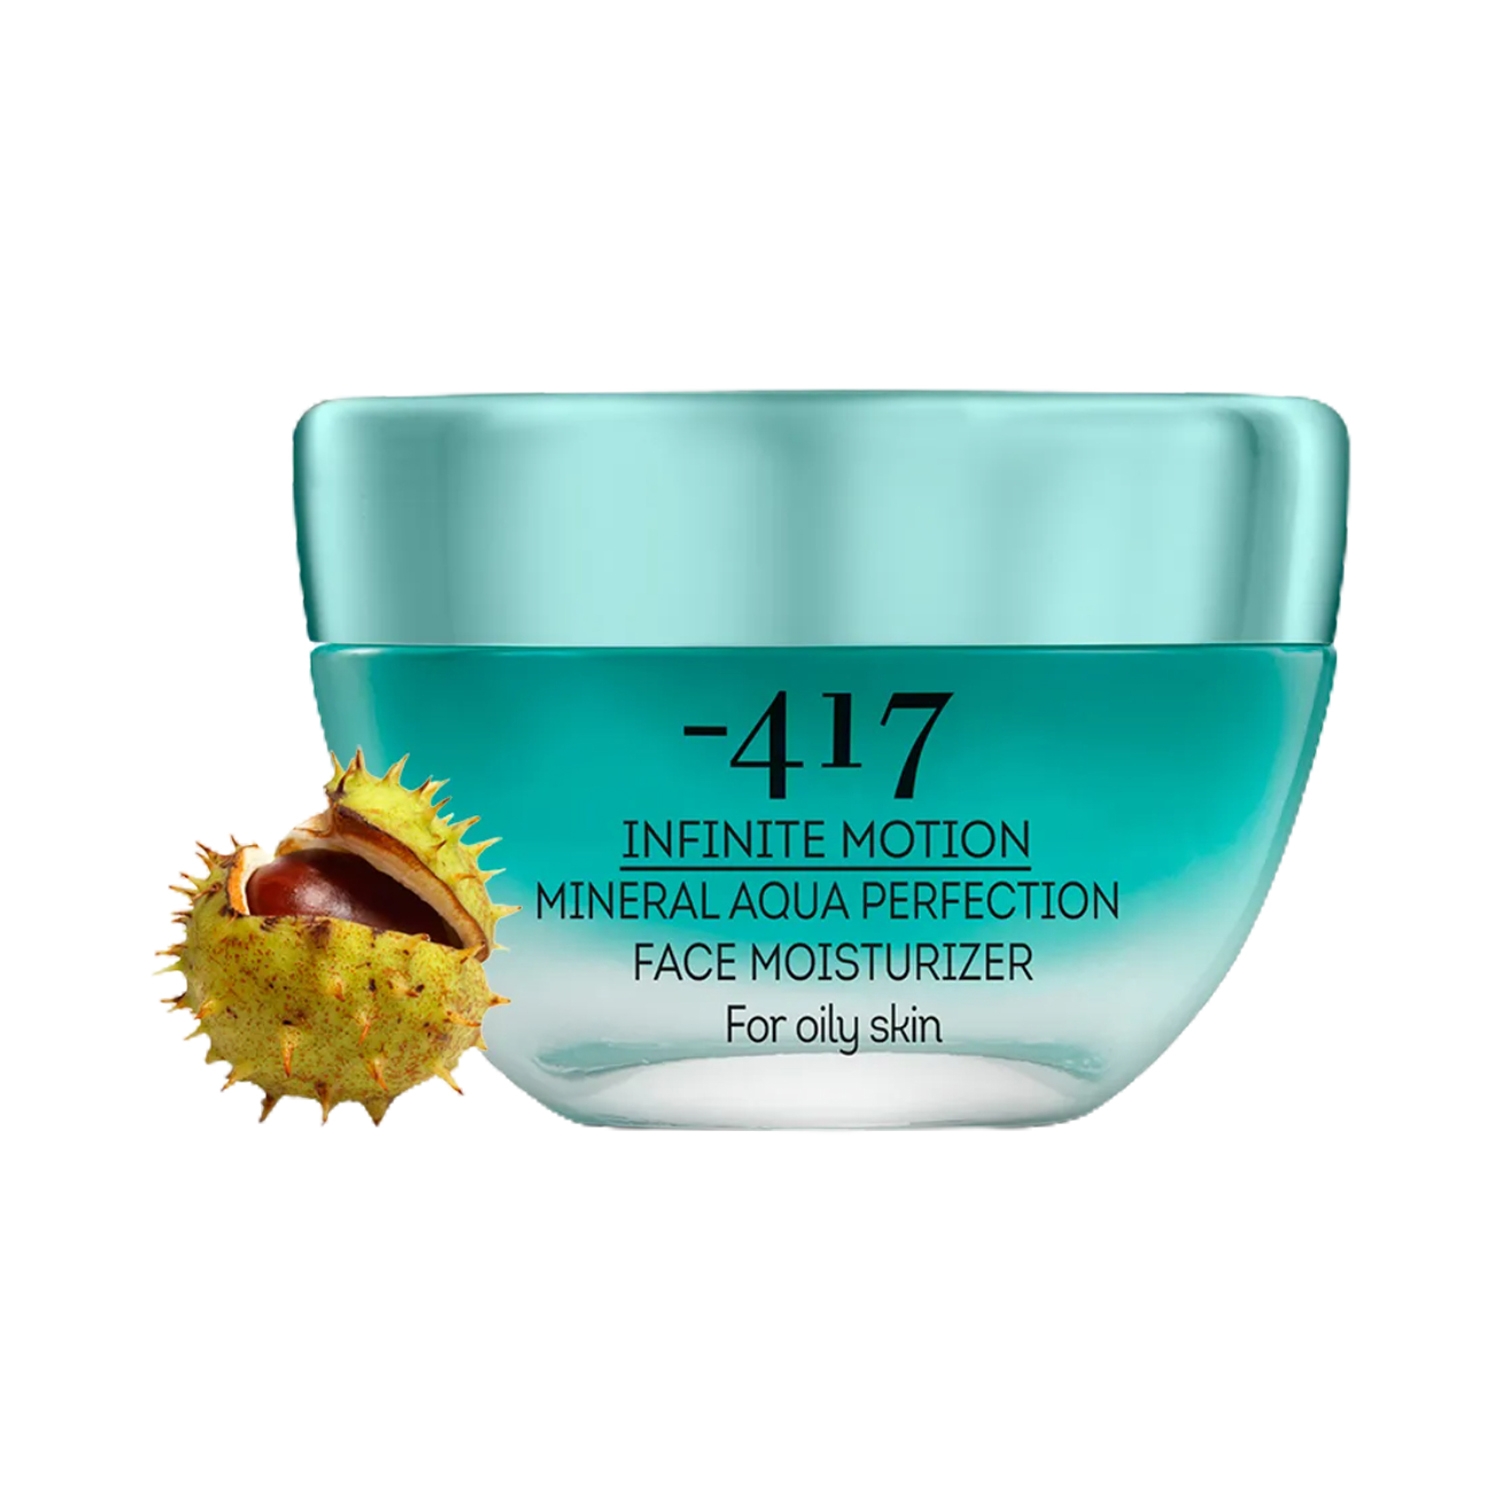 Minus 417 | Minus 417 Infinite Motion Mineral Aqua Perfection Face Moisturizer For Oily Skin (50ml)